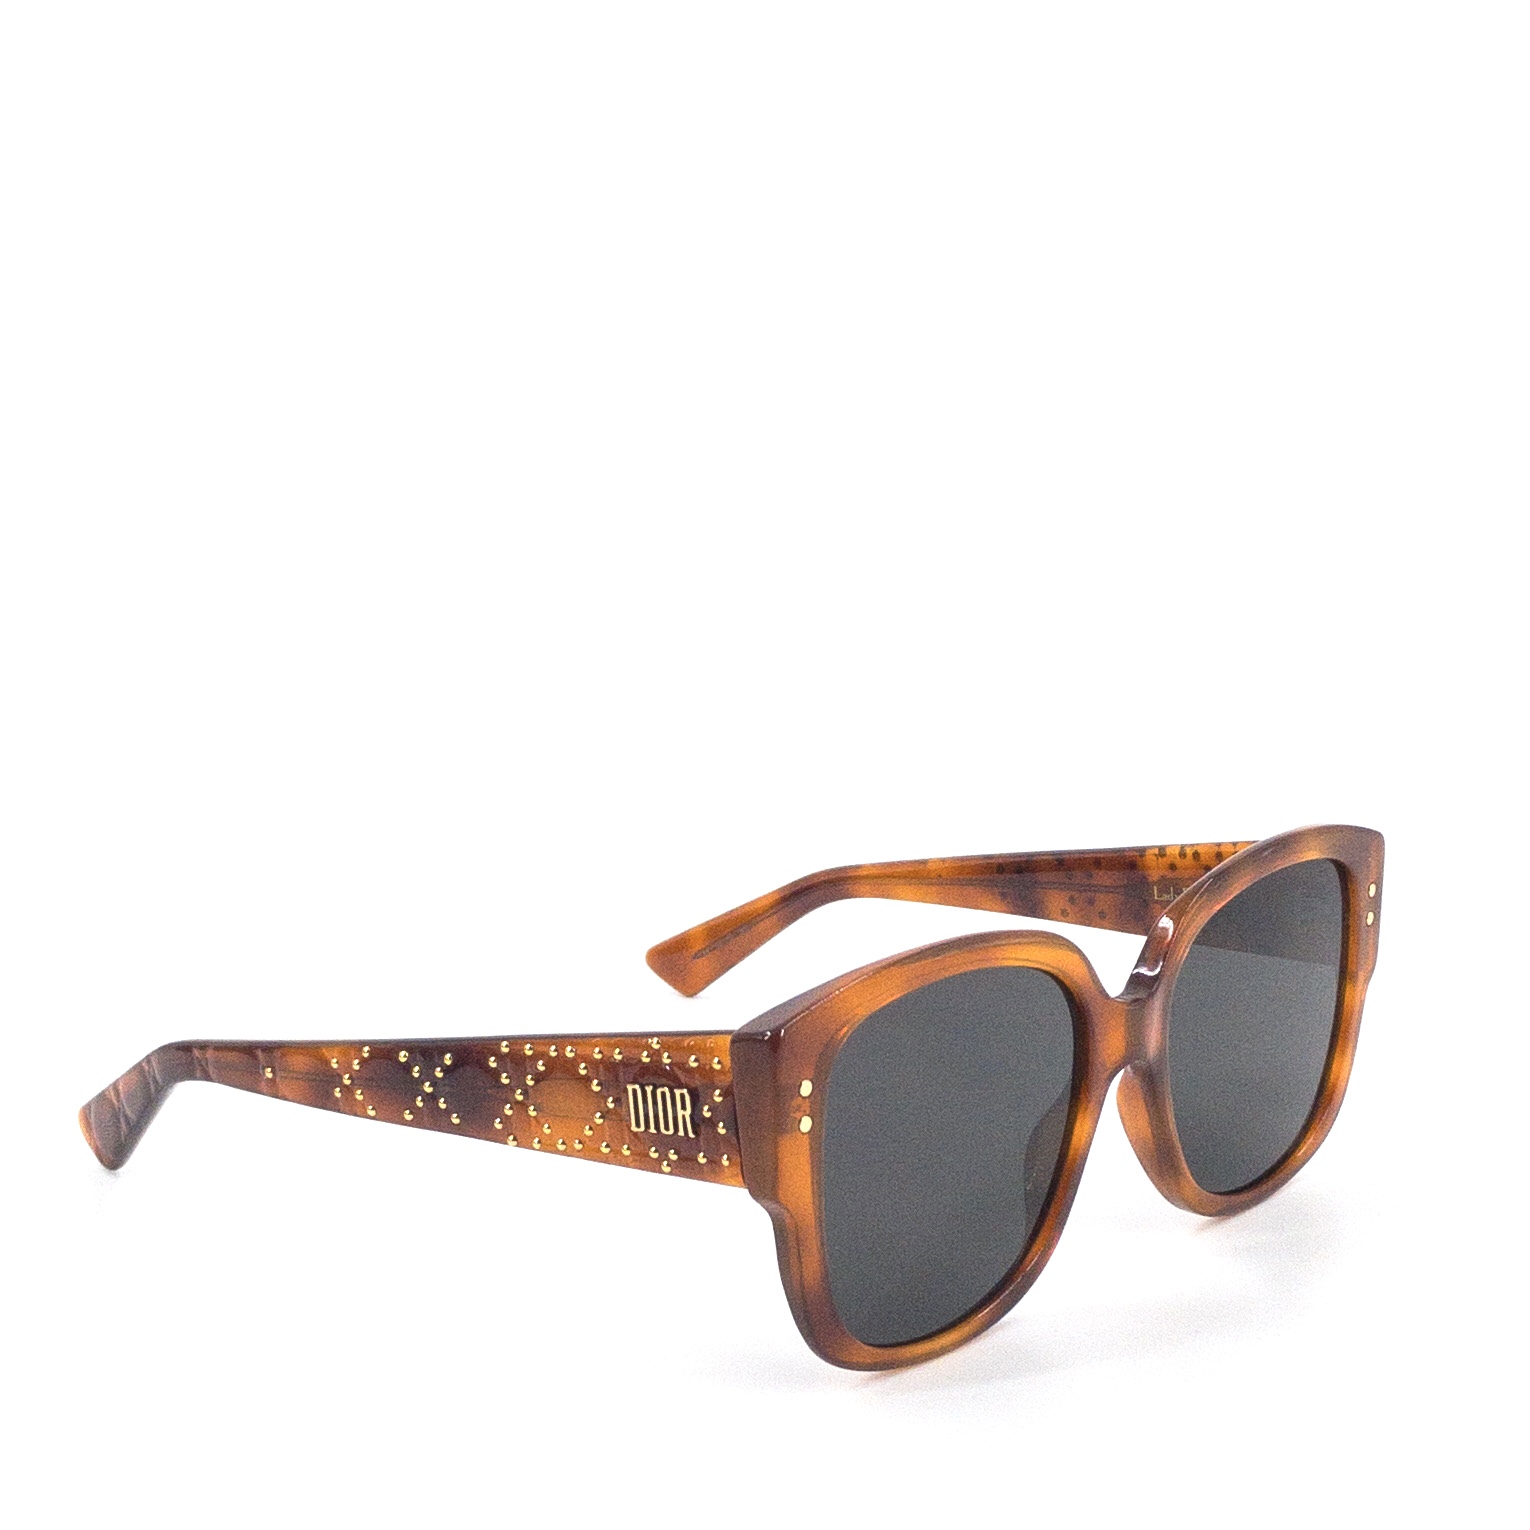 Christian Dior LadyDiorStuds2 Sunglasses Womens Fashion Oval  EyeSpecscom